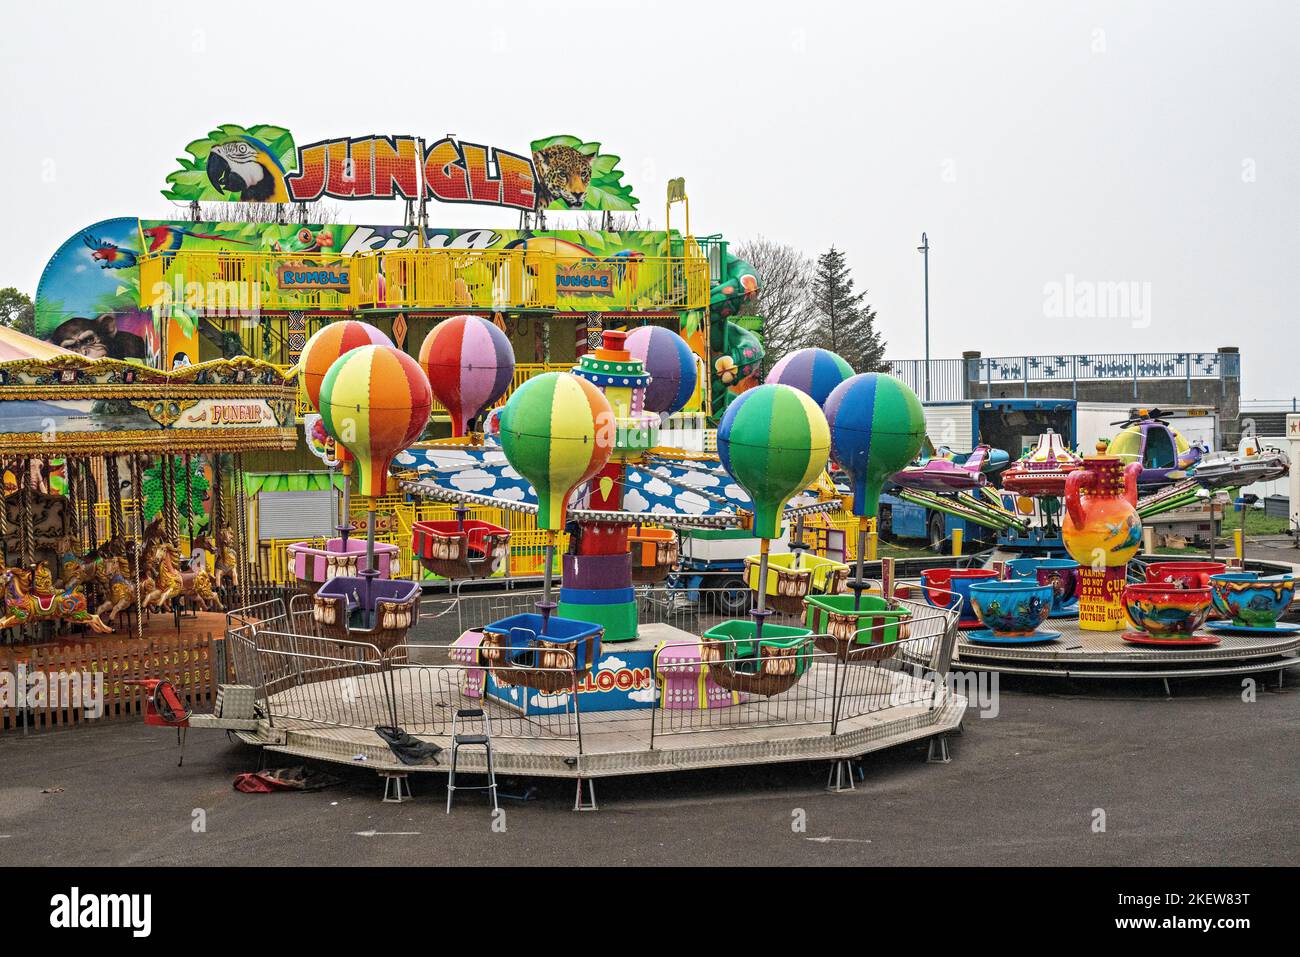 Taylors Fun Fair in Morecambe, Lancashire, UK Stock Photo